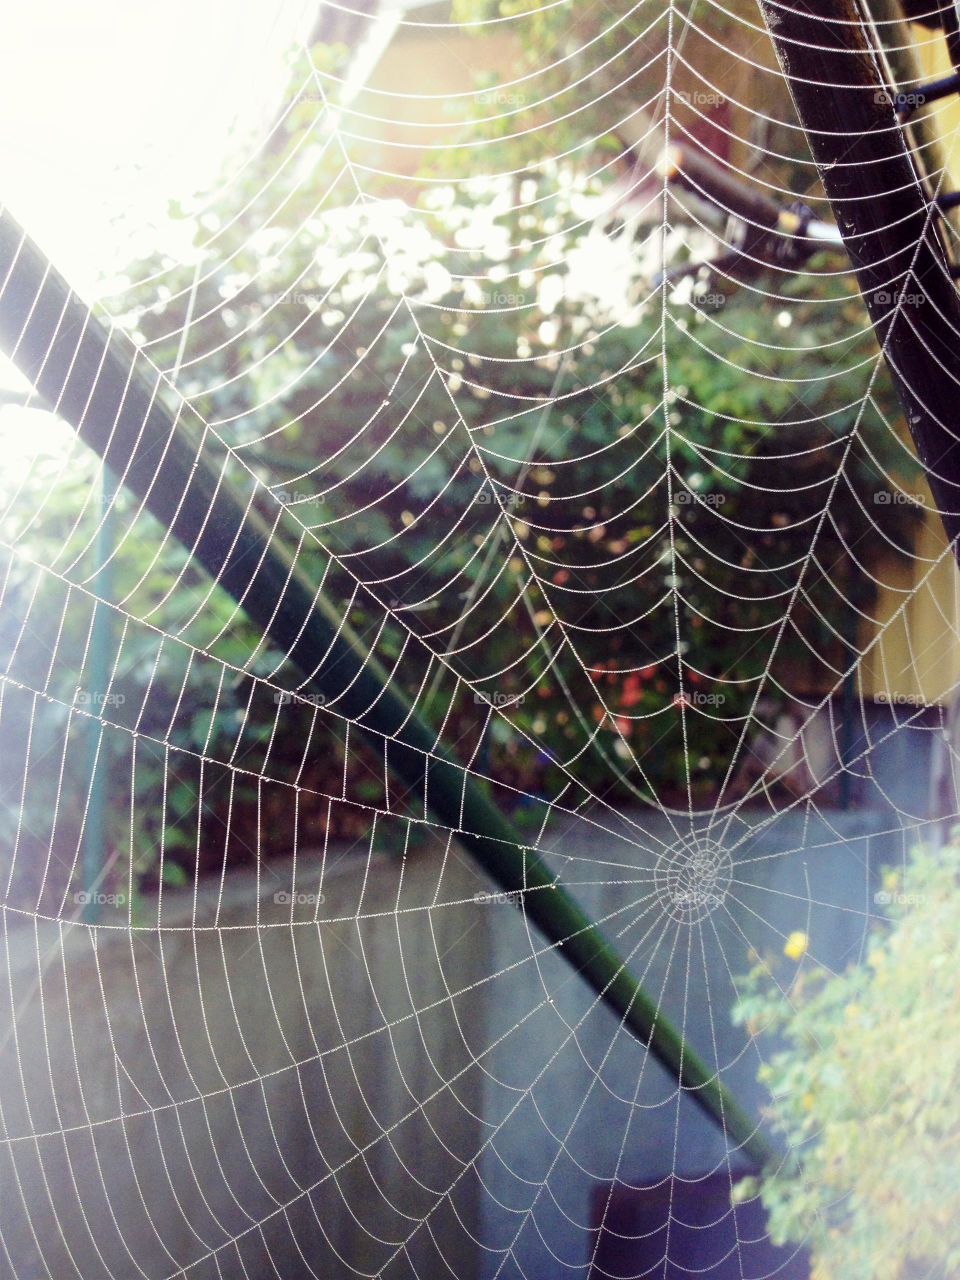 Cobweb in the Morning Garden